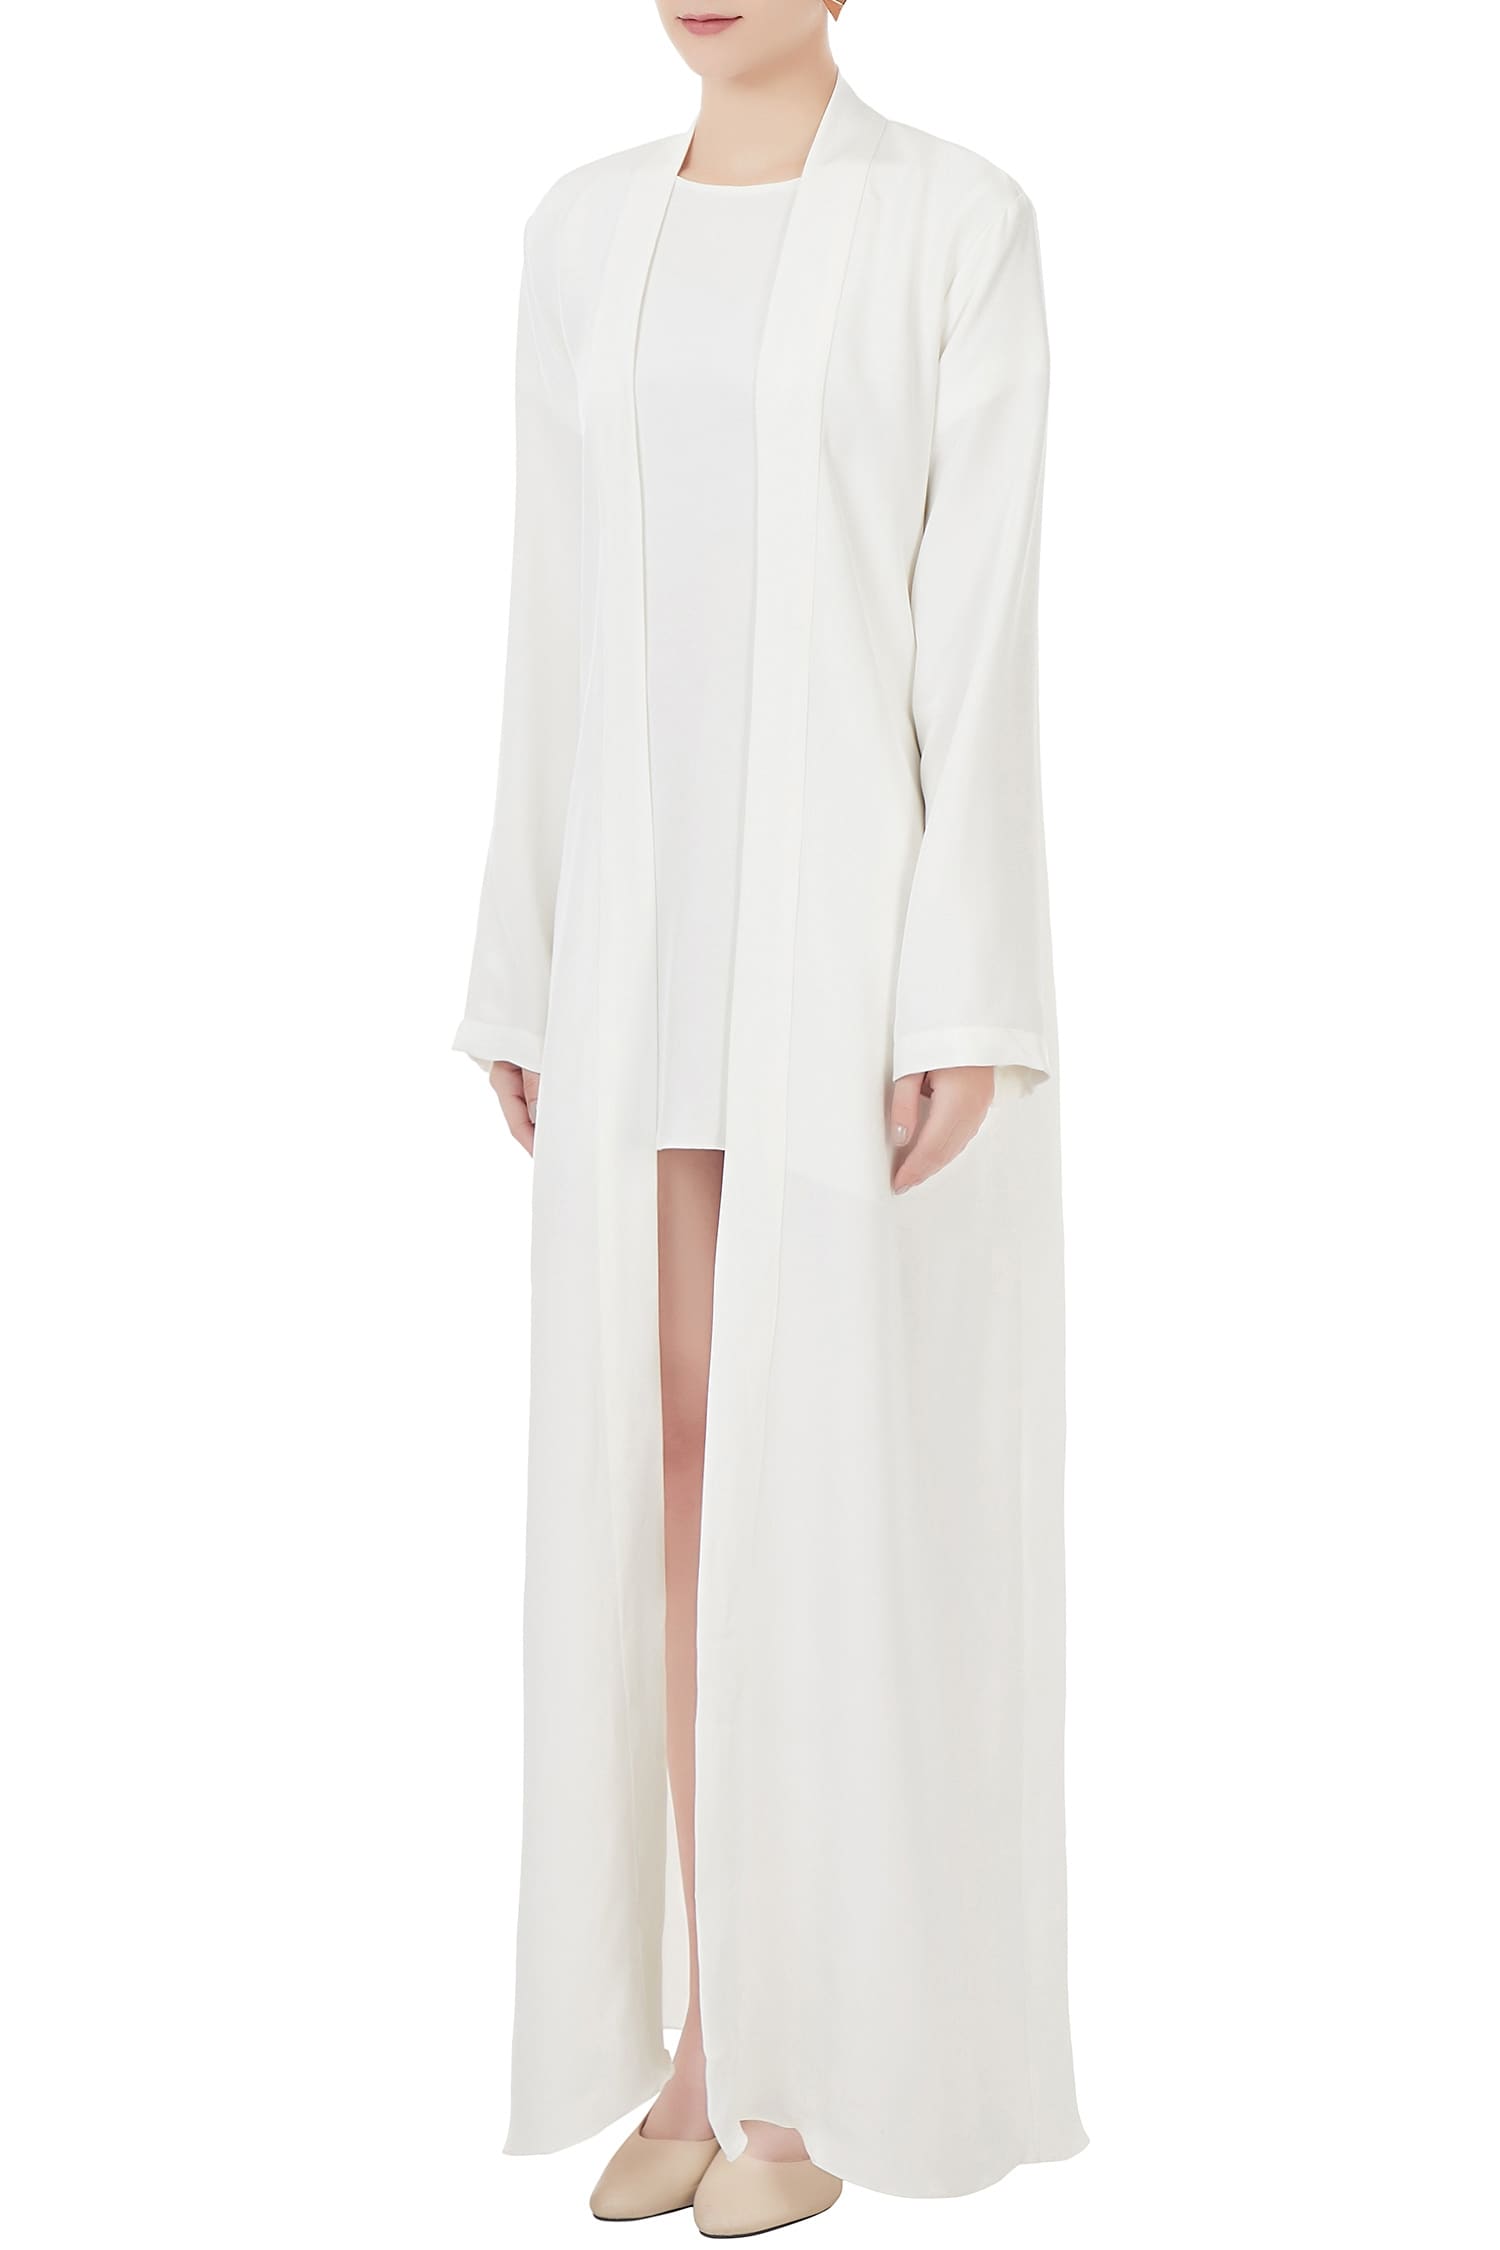 White Jackets & Coats for Women | Shop All Outerwear | Aritzia US